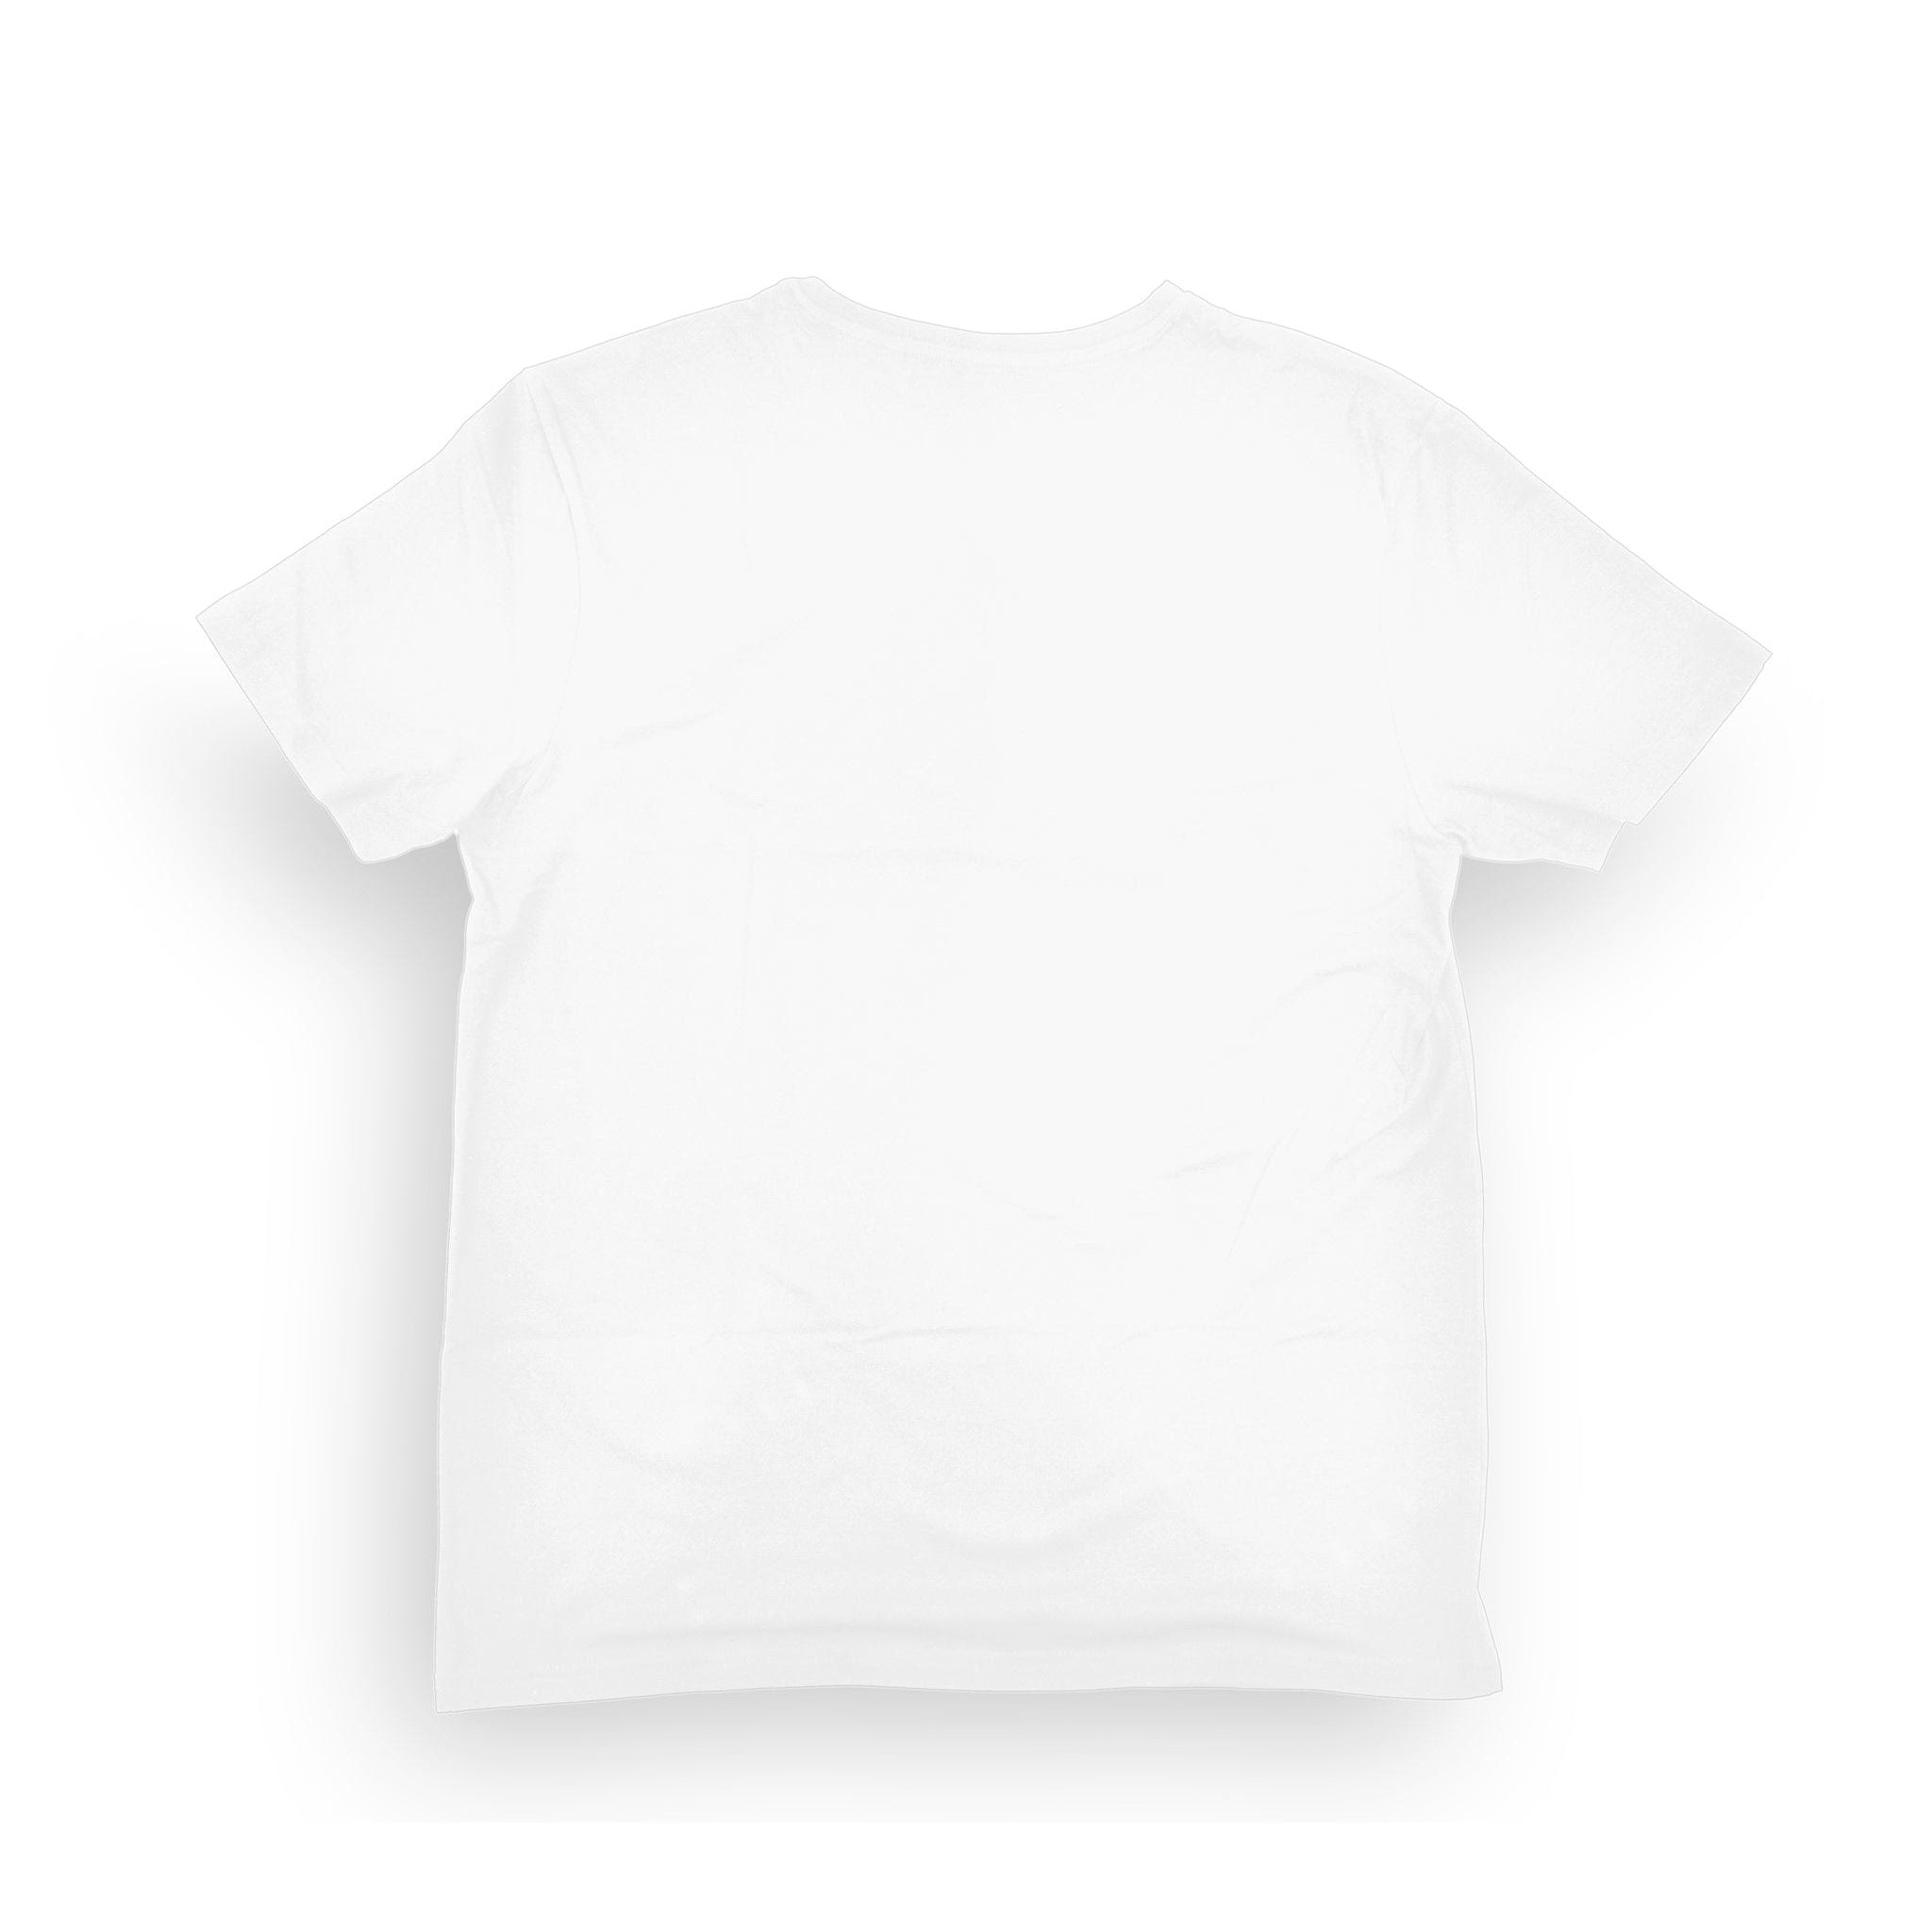 Vox Logo T-Shirt 7